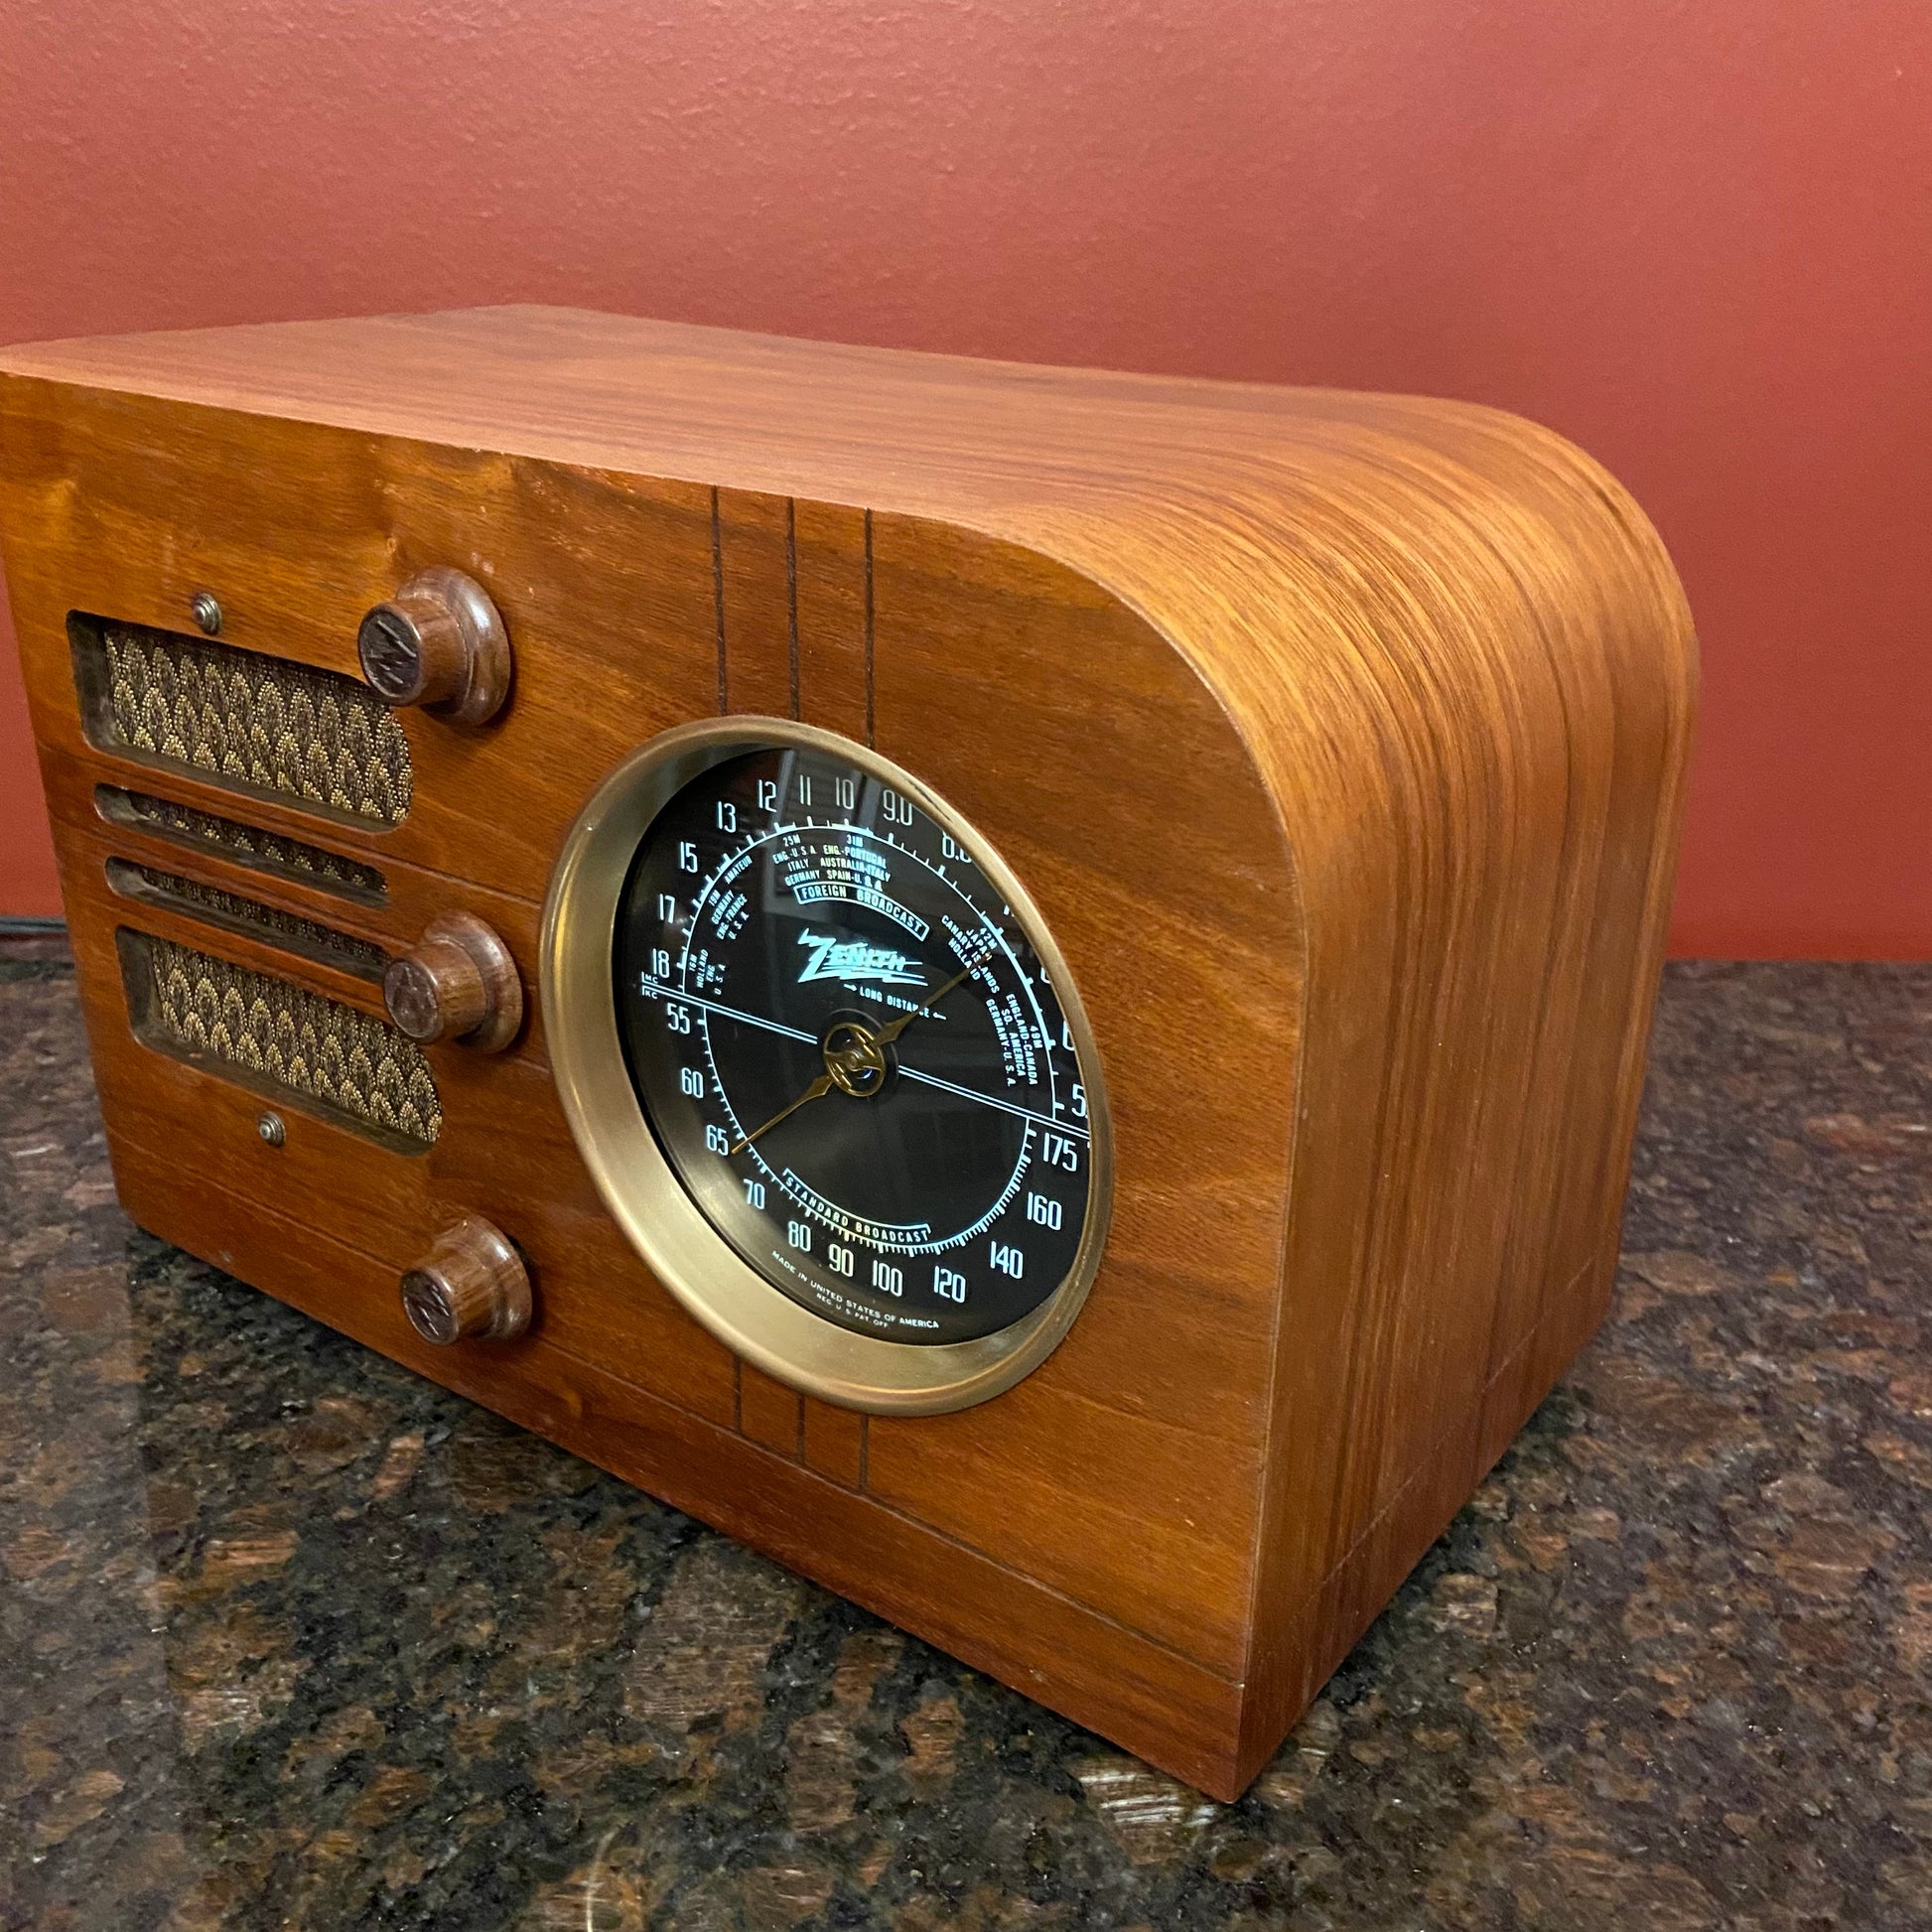 zenith radio for sale